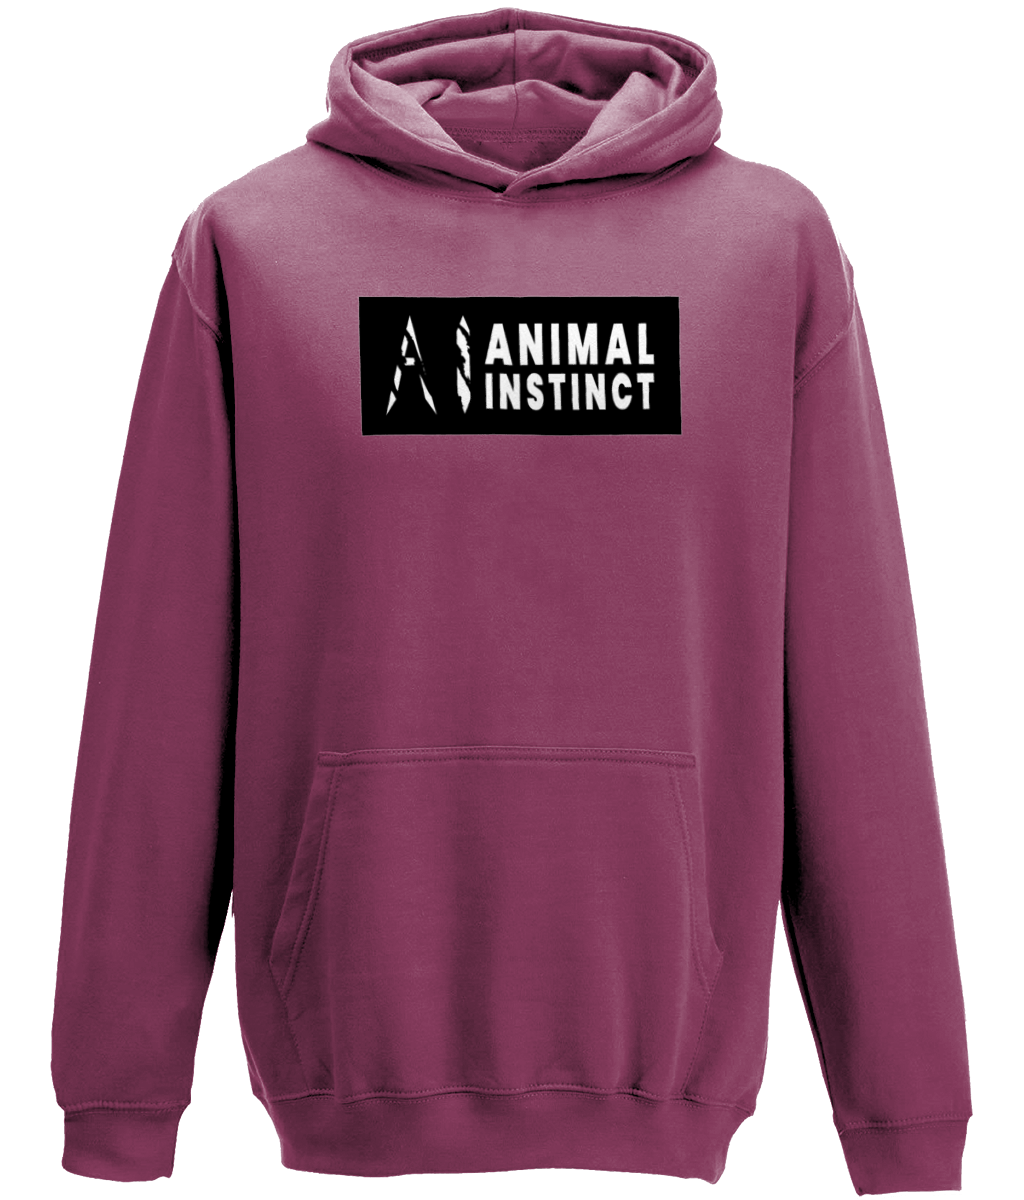 AI Clothing Animal Instinct dark purple Hoodie with Black Box and White Writing with White AI Logo